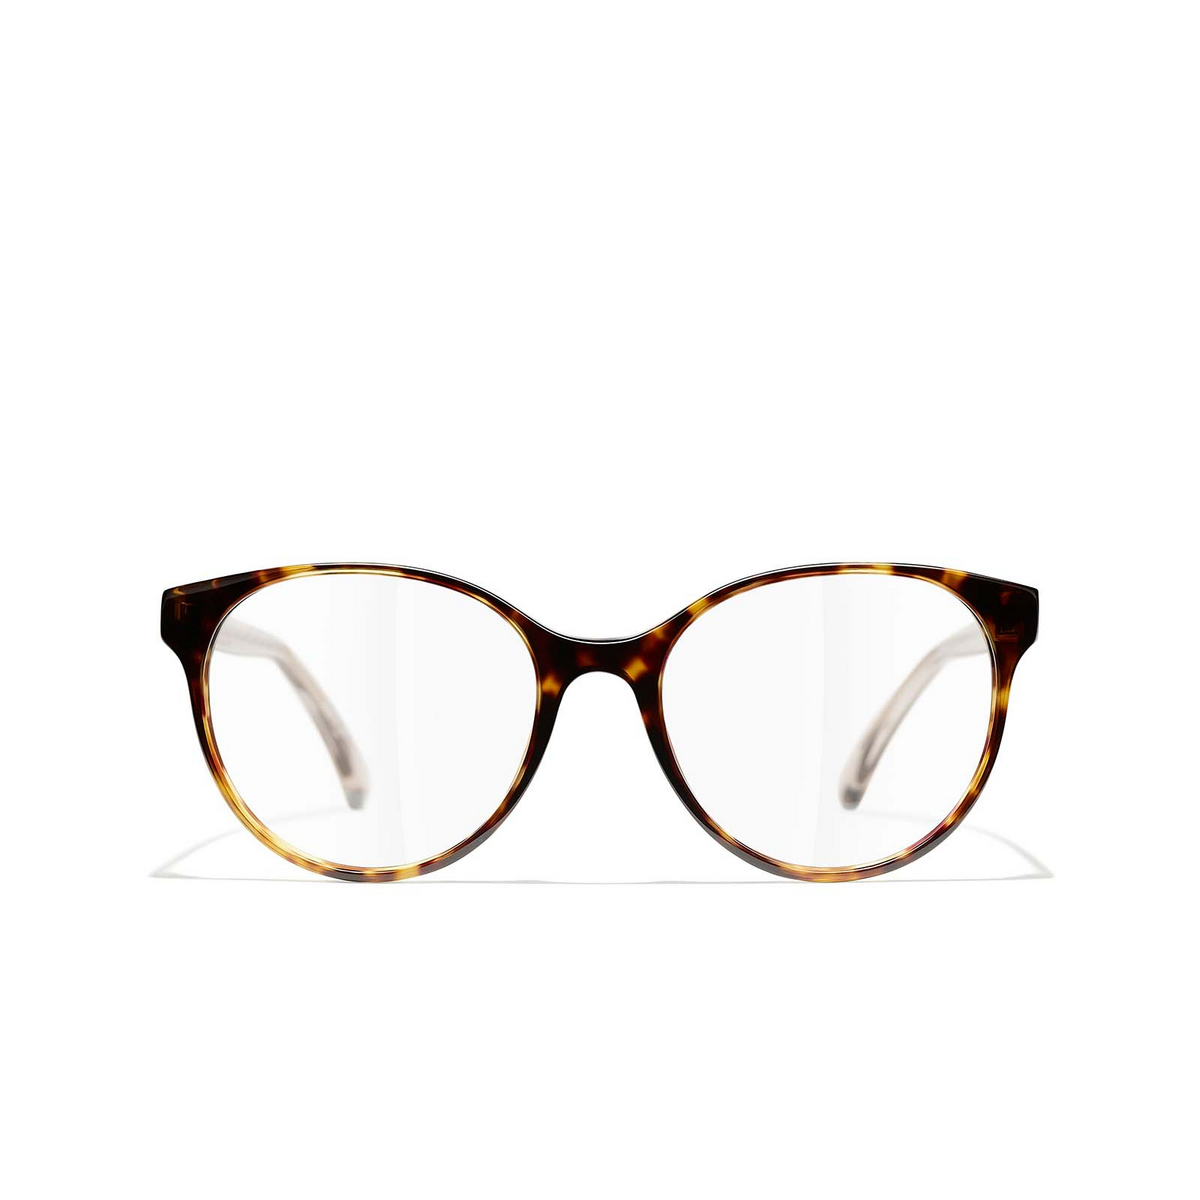 CHANEL pantos Eyeglasses C714 Dark Tortoise - front view